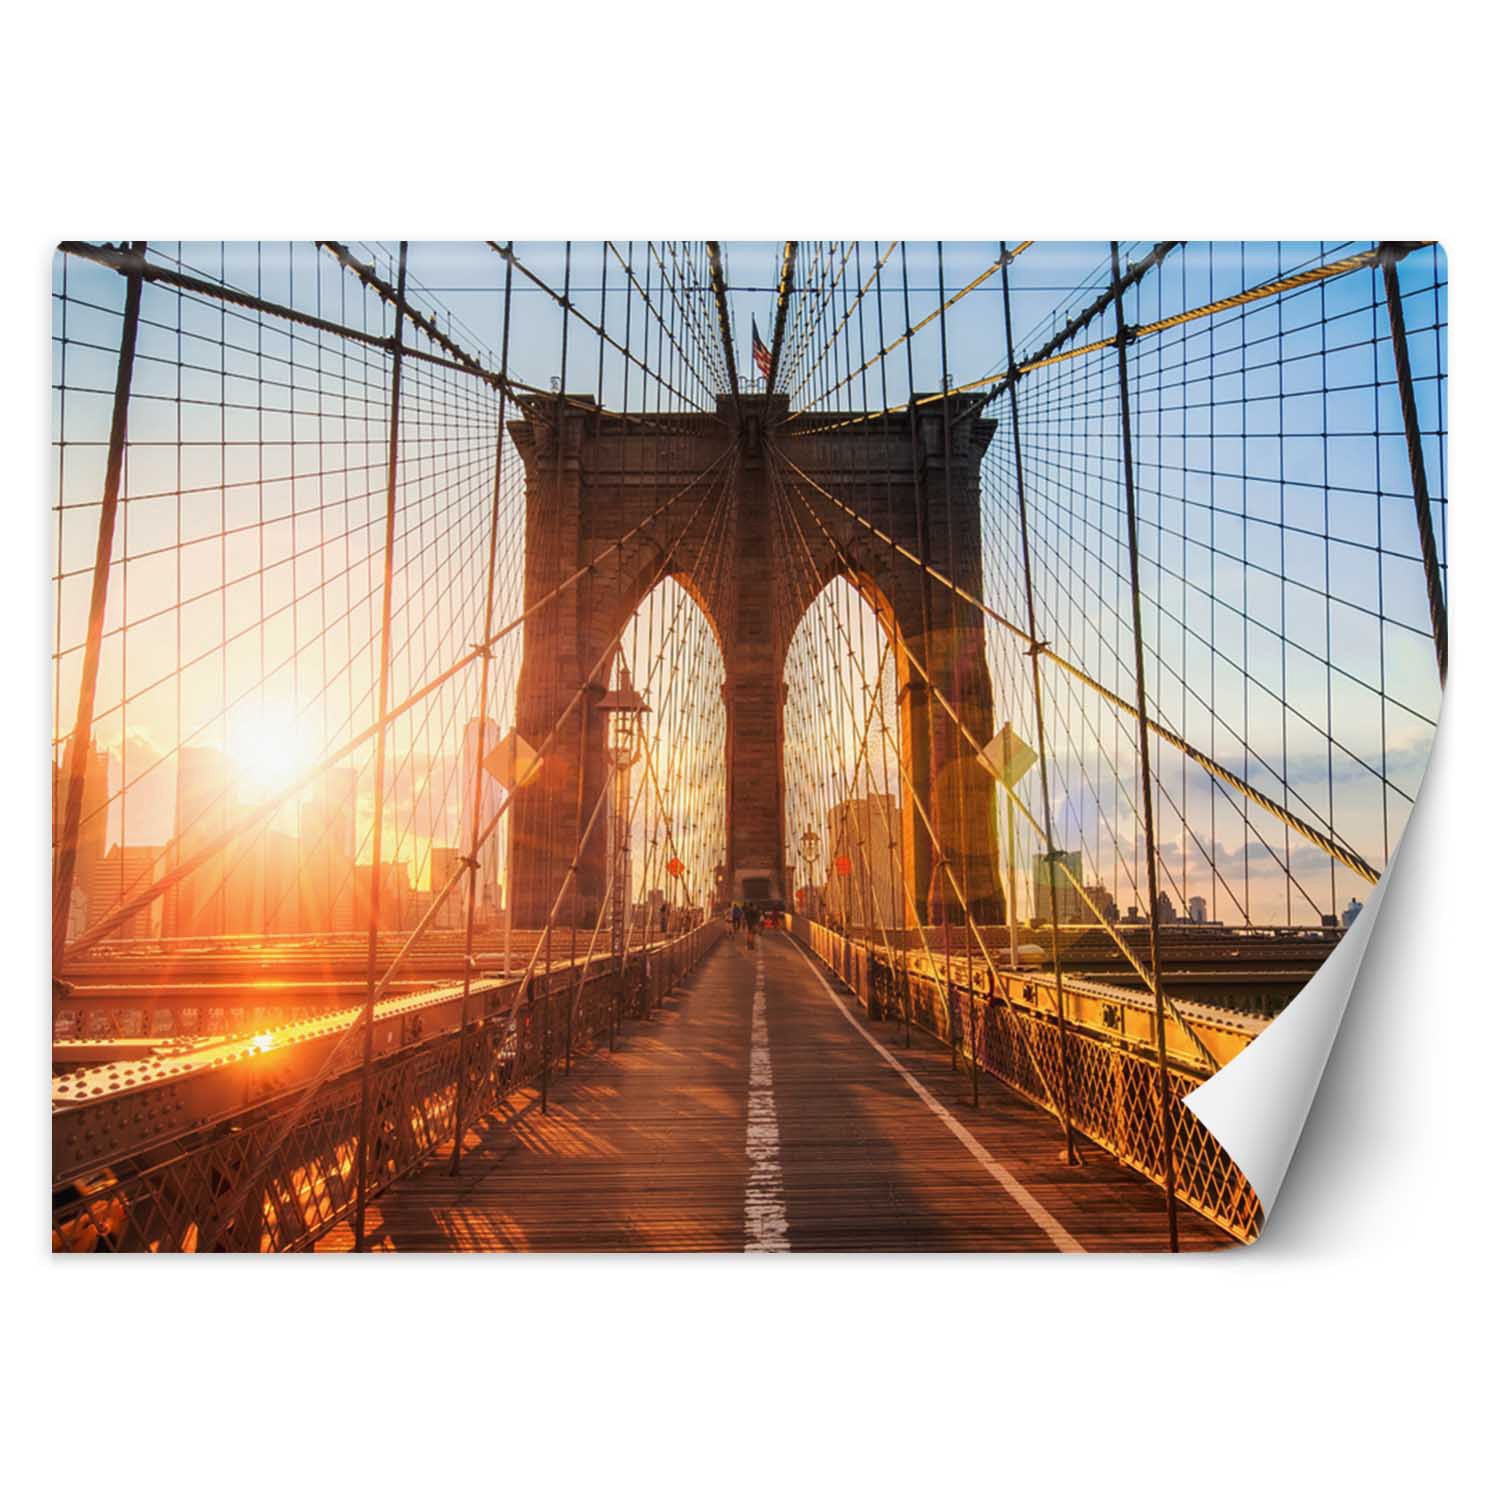 Trend24 – Behang – Brooklyn Bridge – Vliesbehang – Fotobehang – Behang Woonkamer – 350×245 cm – Incl. behanglijm